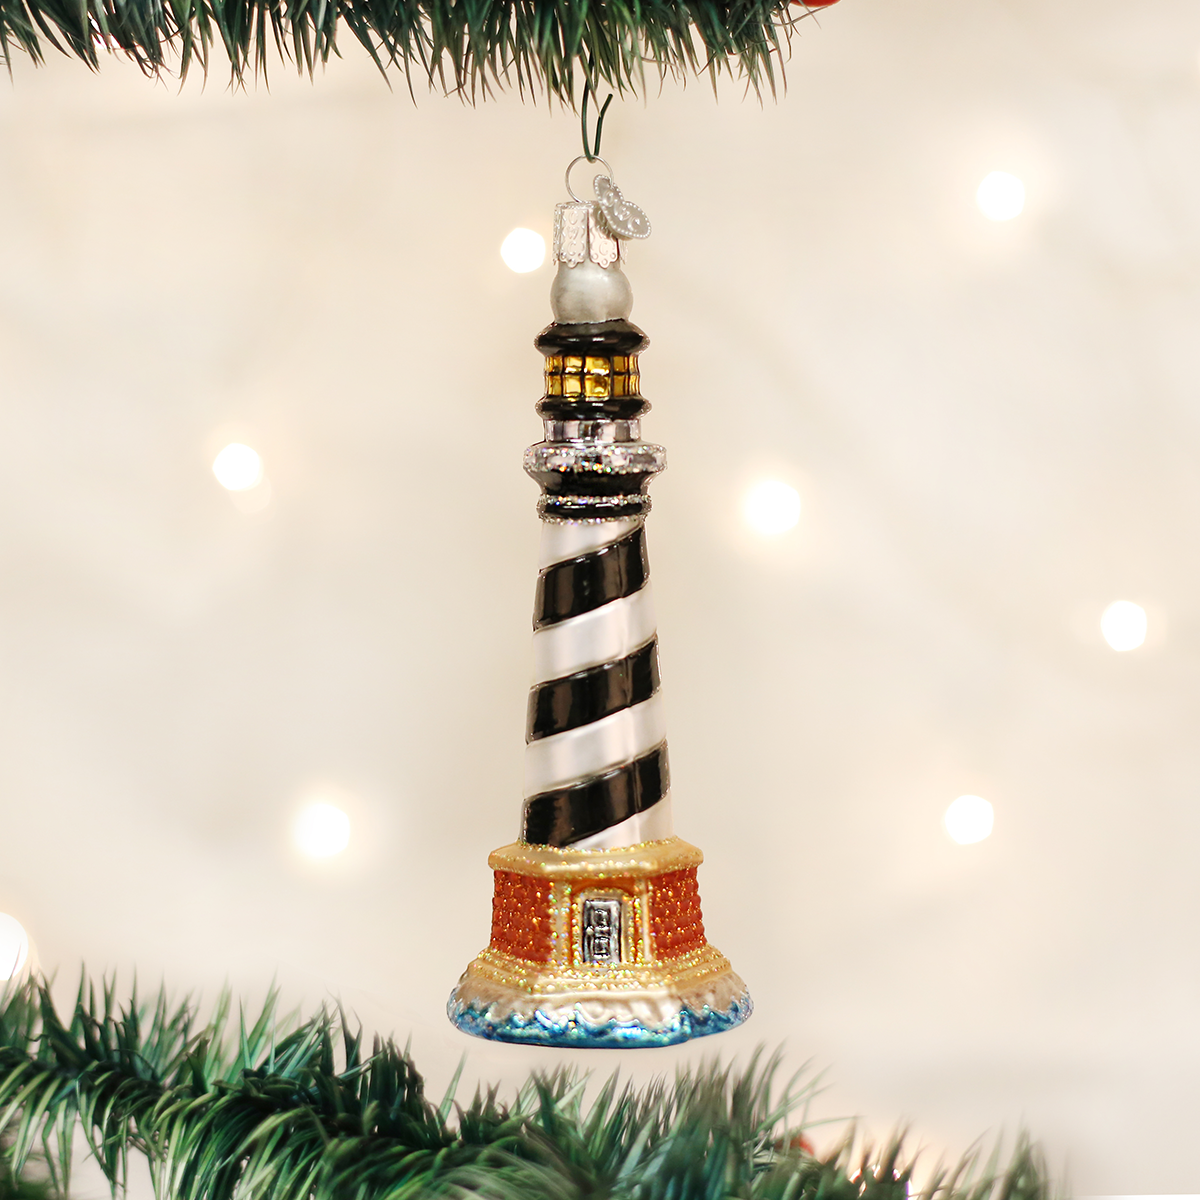  Cape  Hatteras Lighthouse Ornament Christmas  Ornament 